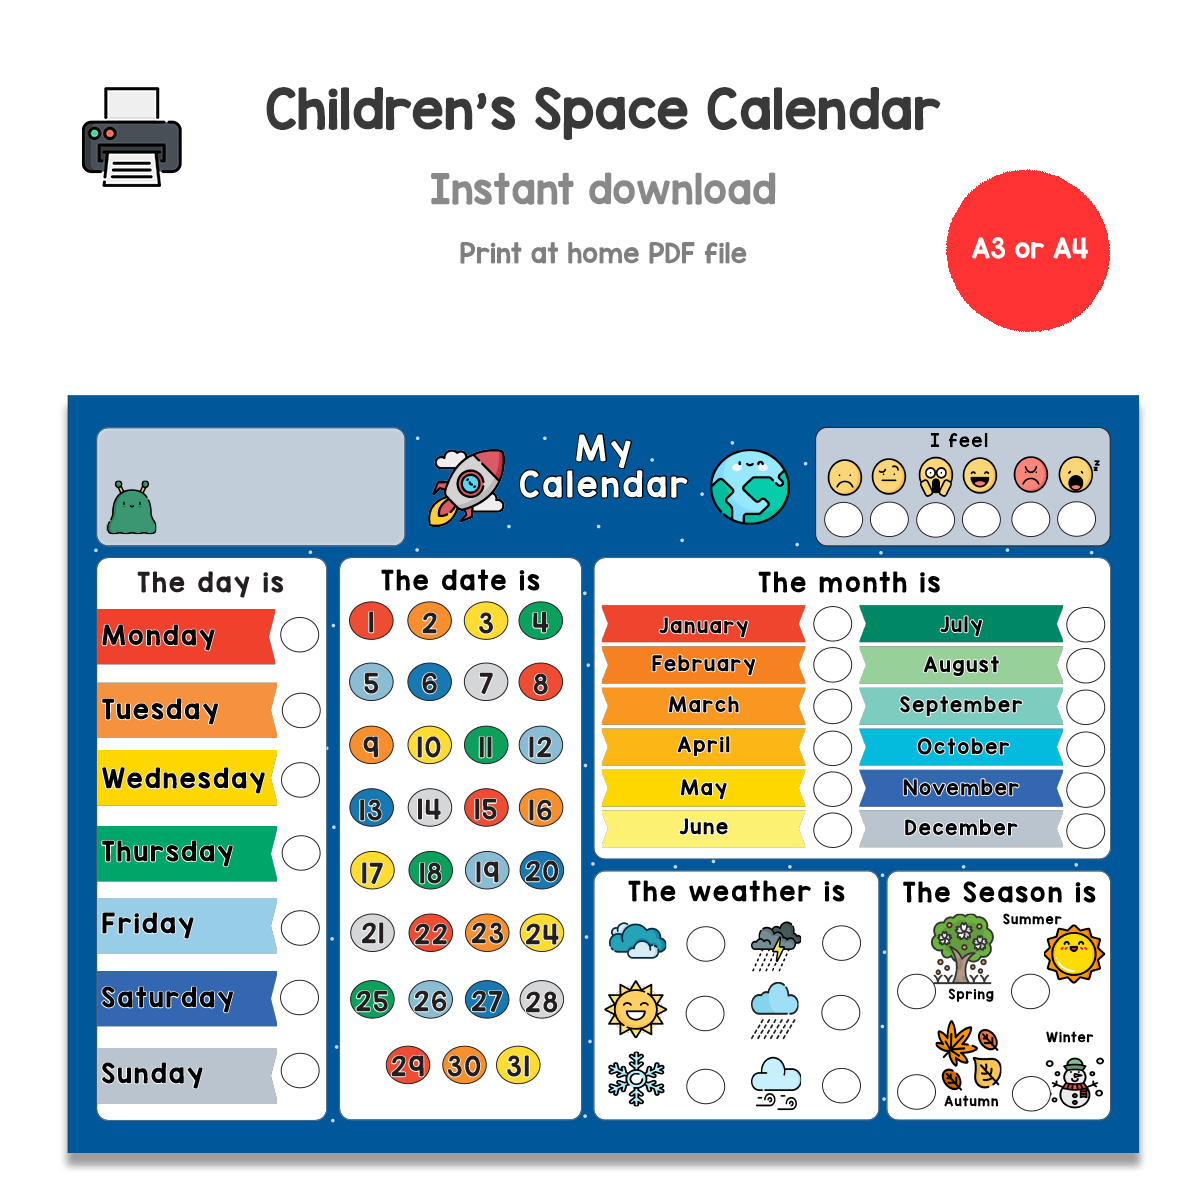 Children's Space Calendar